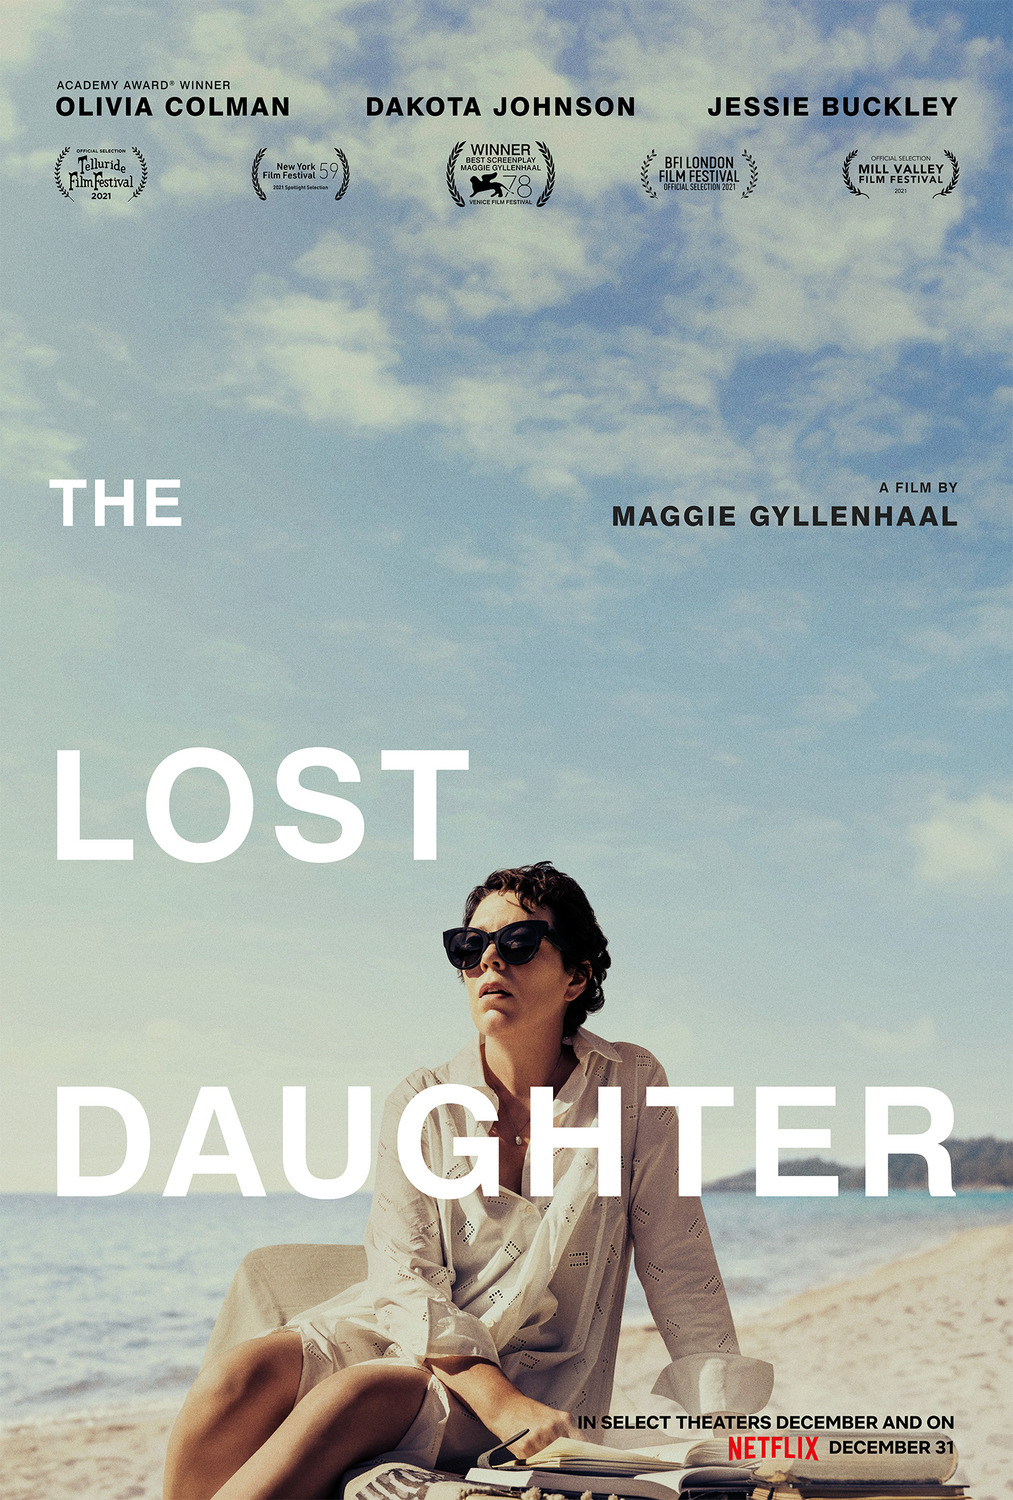 A Filha Perdida | Trilher de suspense protagonizado por Olivia Colman e Dakota Johnson